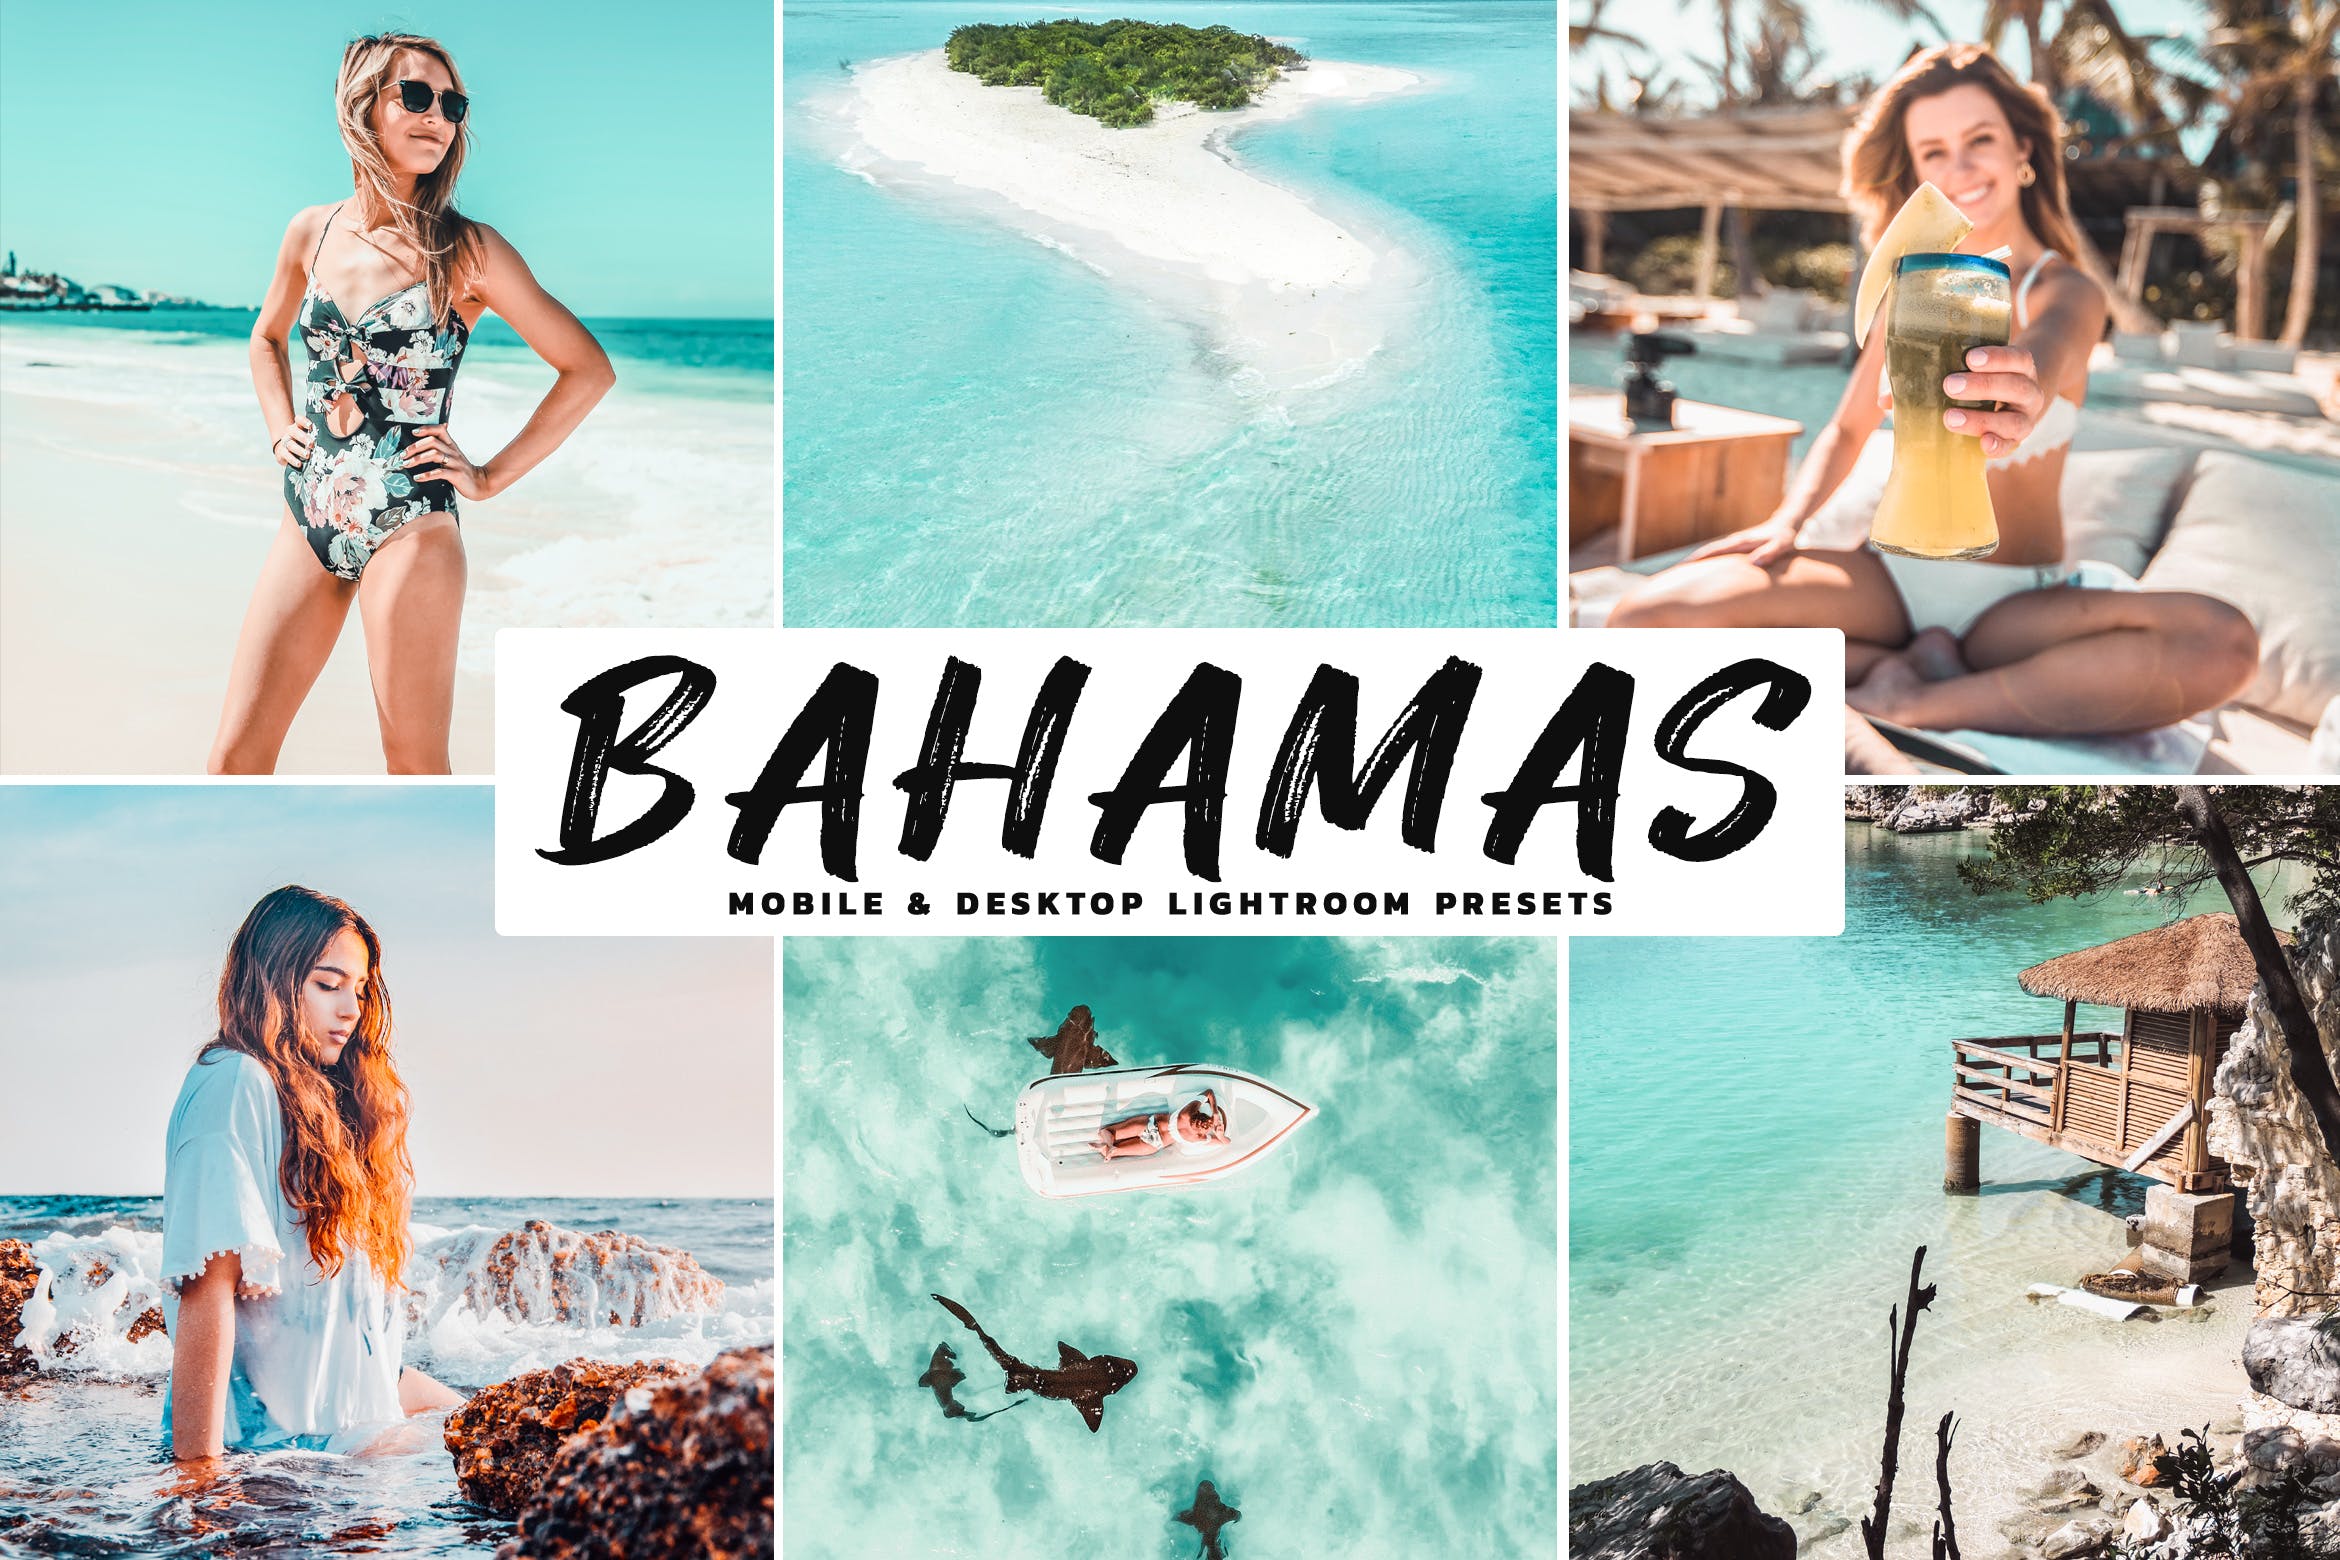 海滩旅行摄影后期处理调色滤镜LR预设 Bahamas Mobile & Desktop Lightroom Presets插图